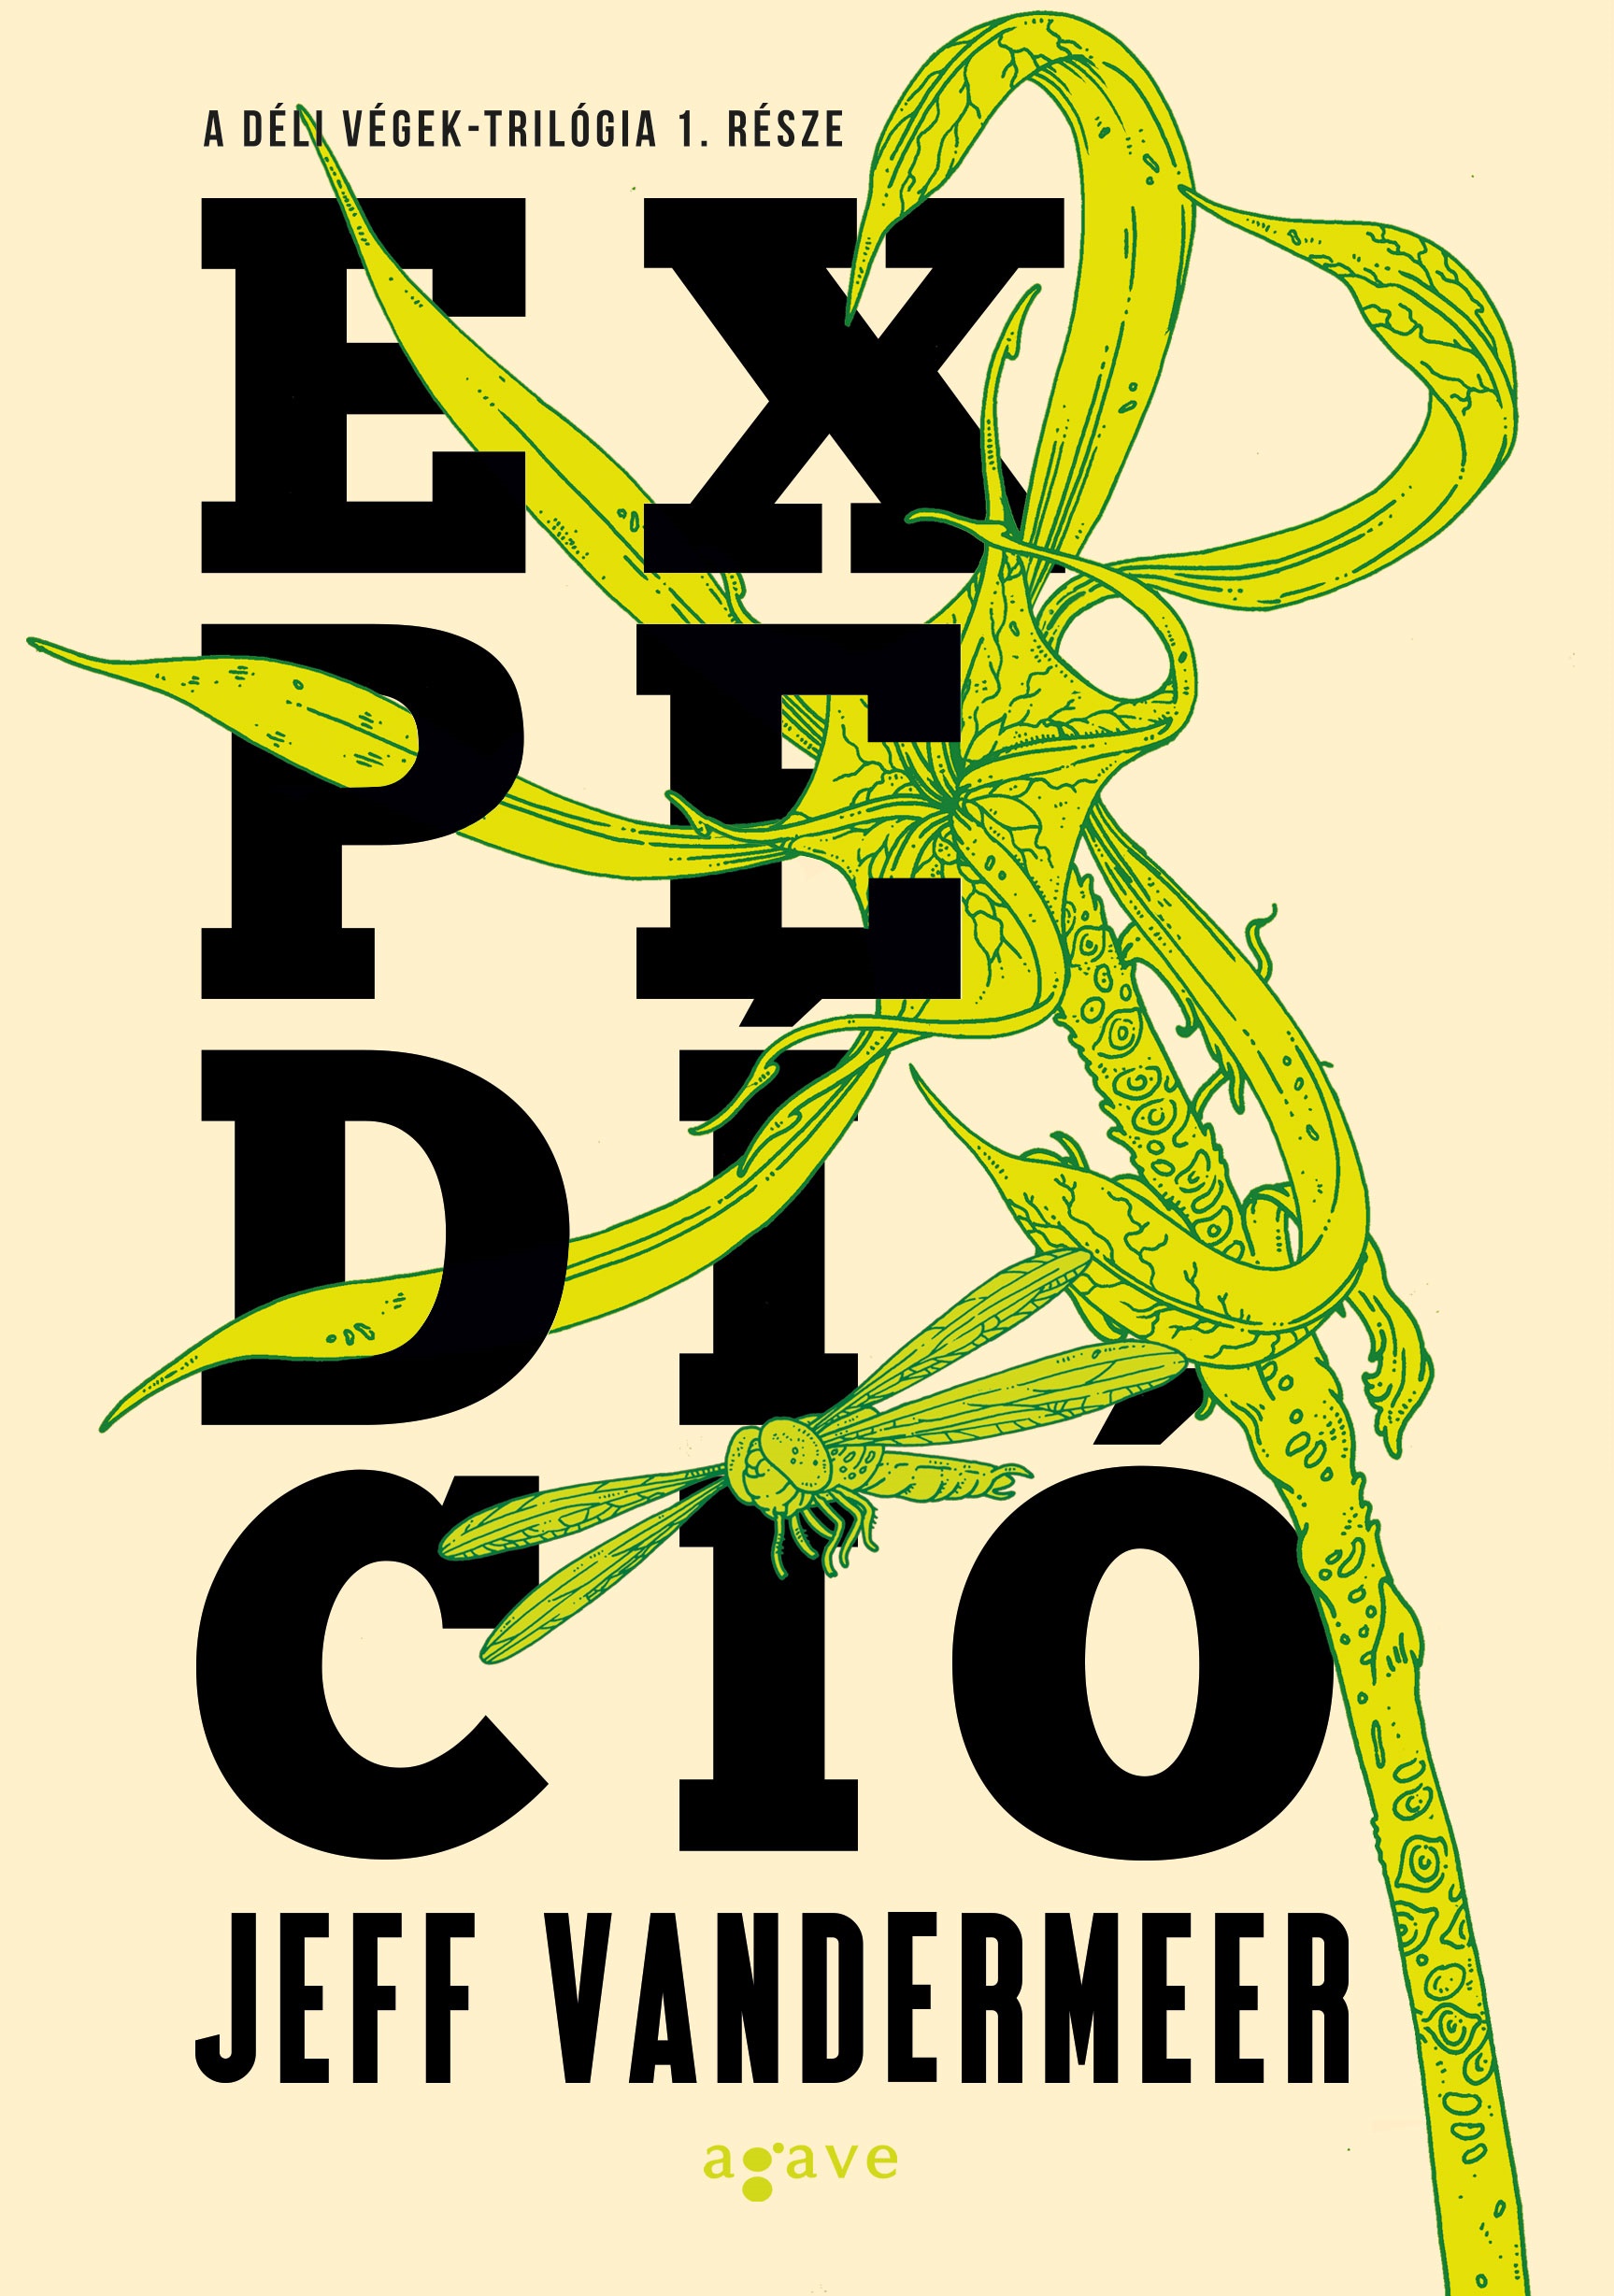 Jeff VanderMeer - Expedíció